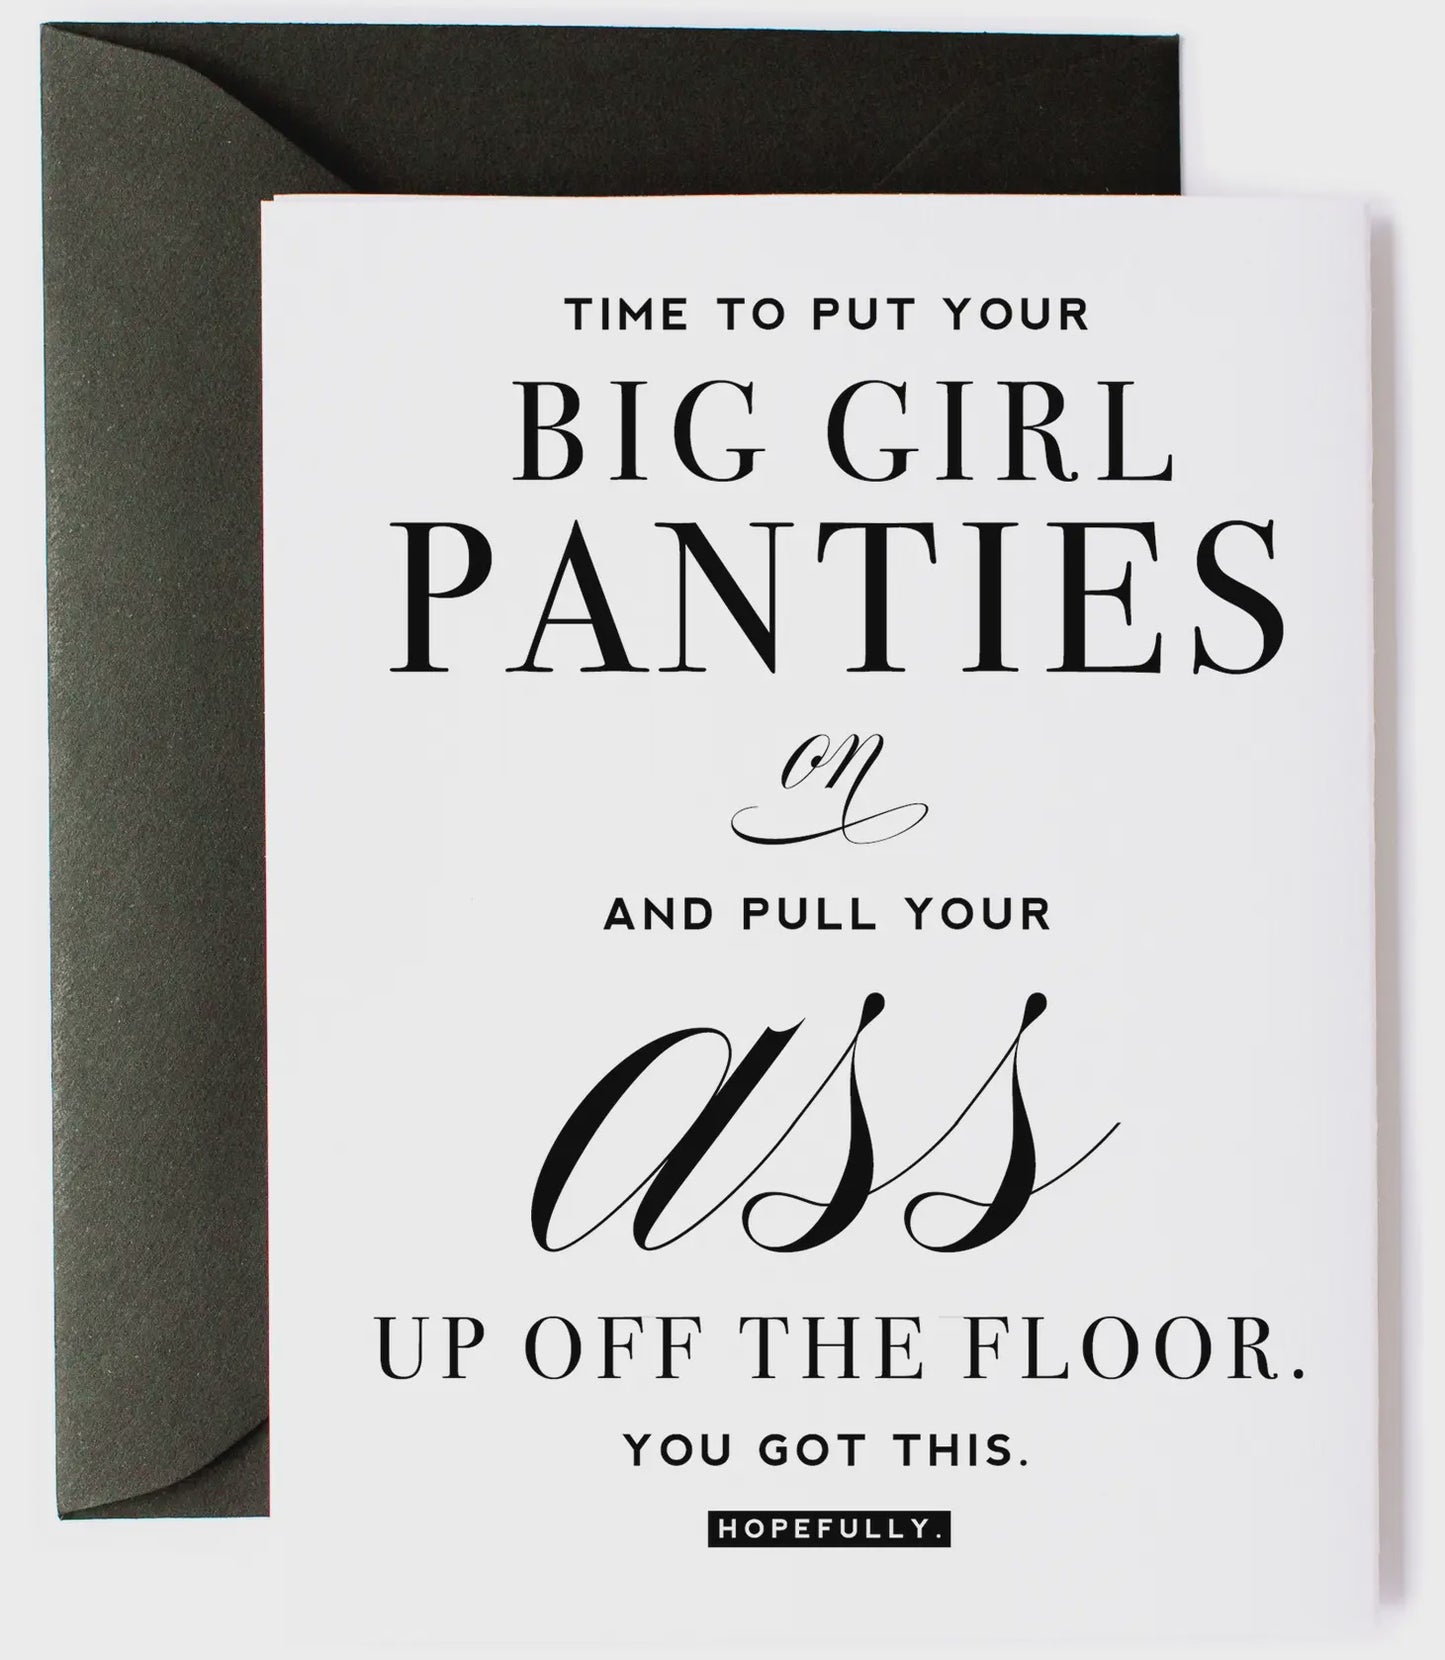 Big Girl Panties – NOW ITS A PARTY